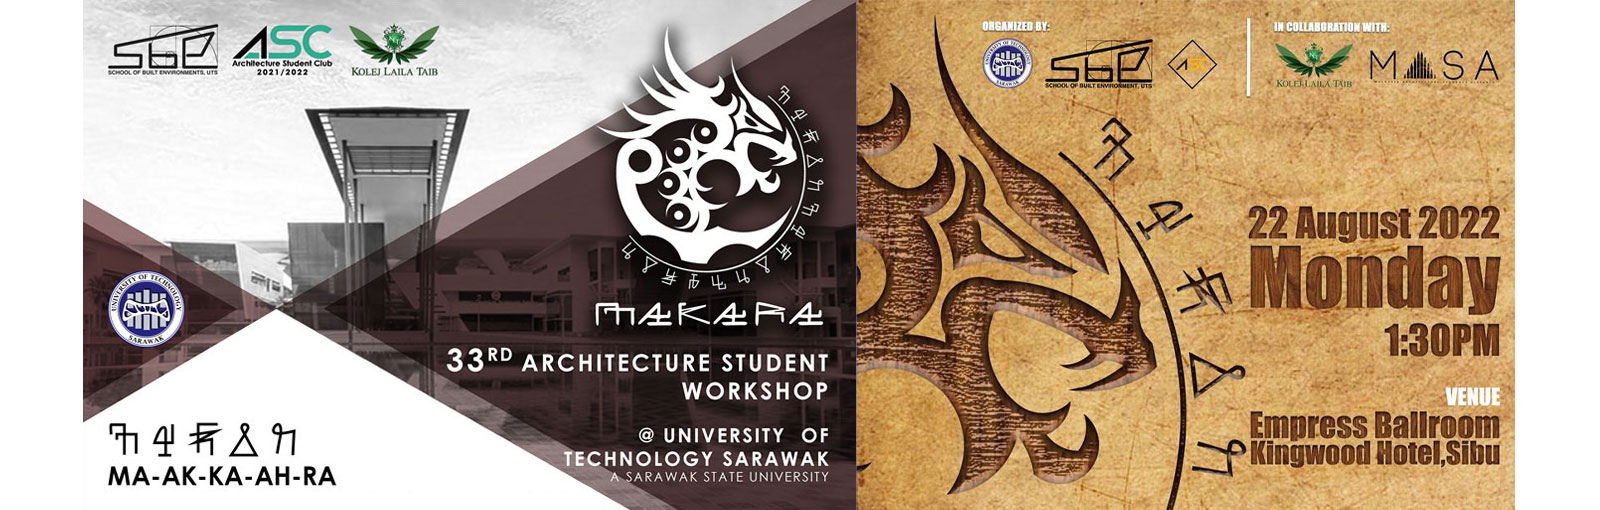 33rd Architectural Student Workshop 2022 MAKARA